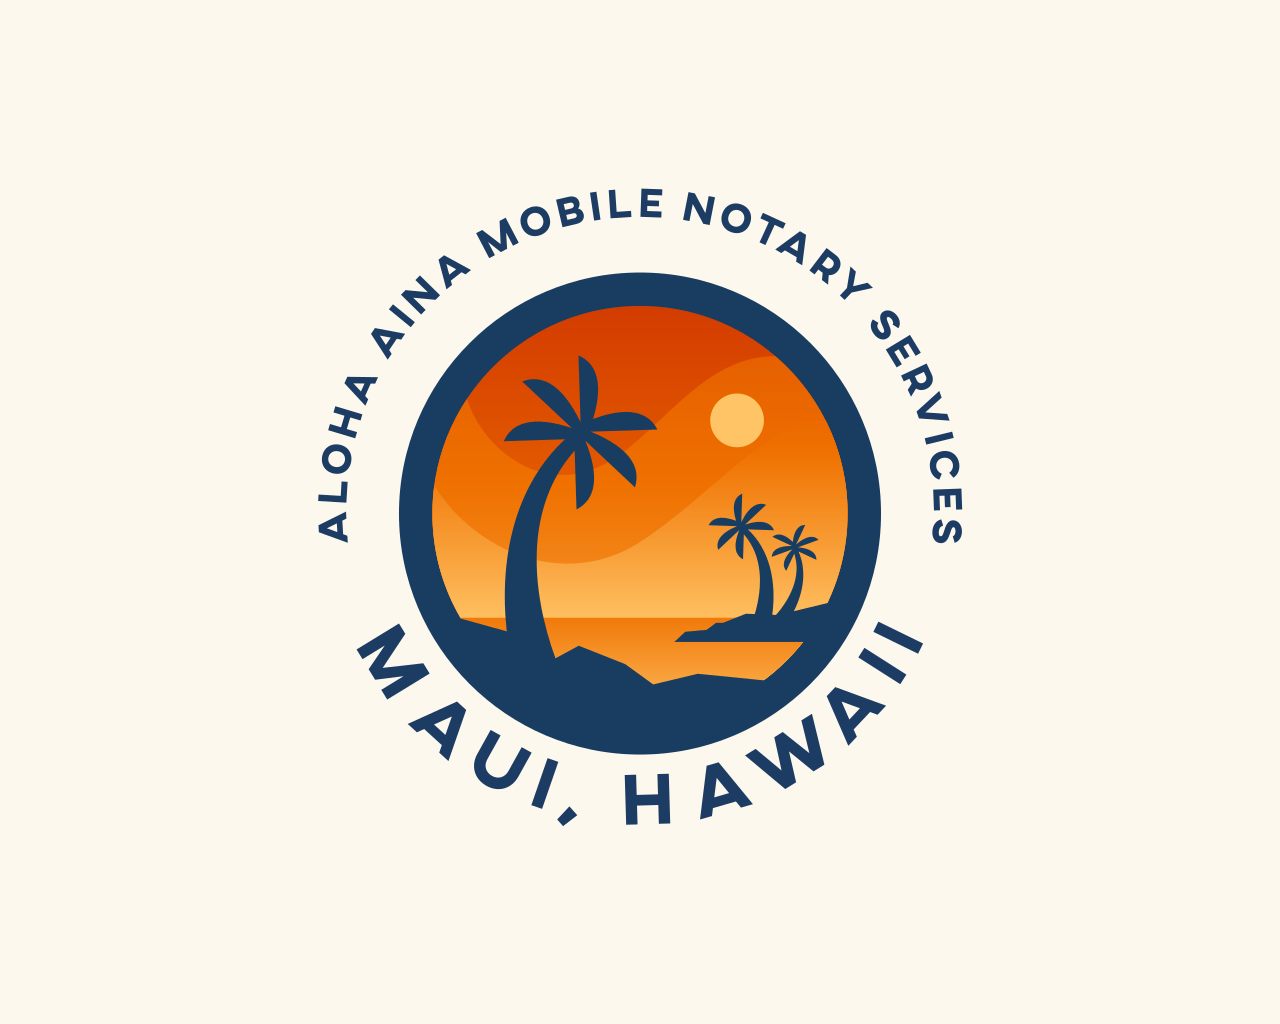 Aloha Aina Mobile Notary